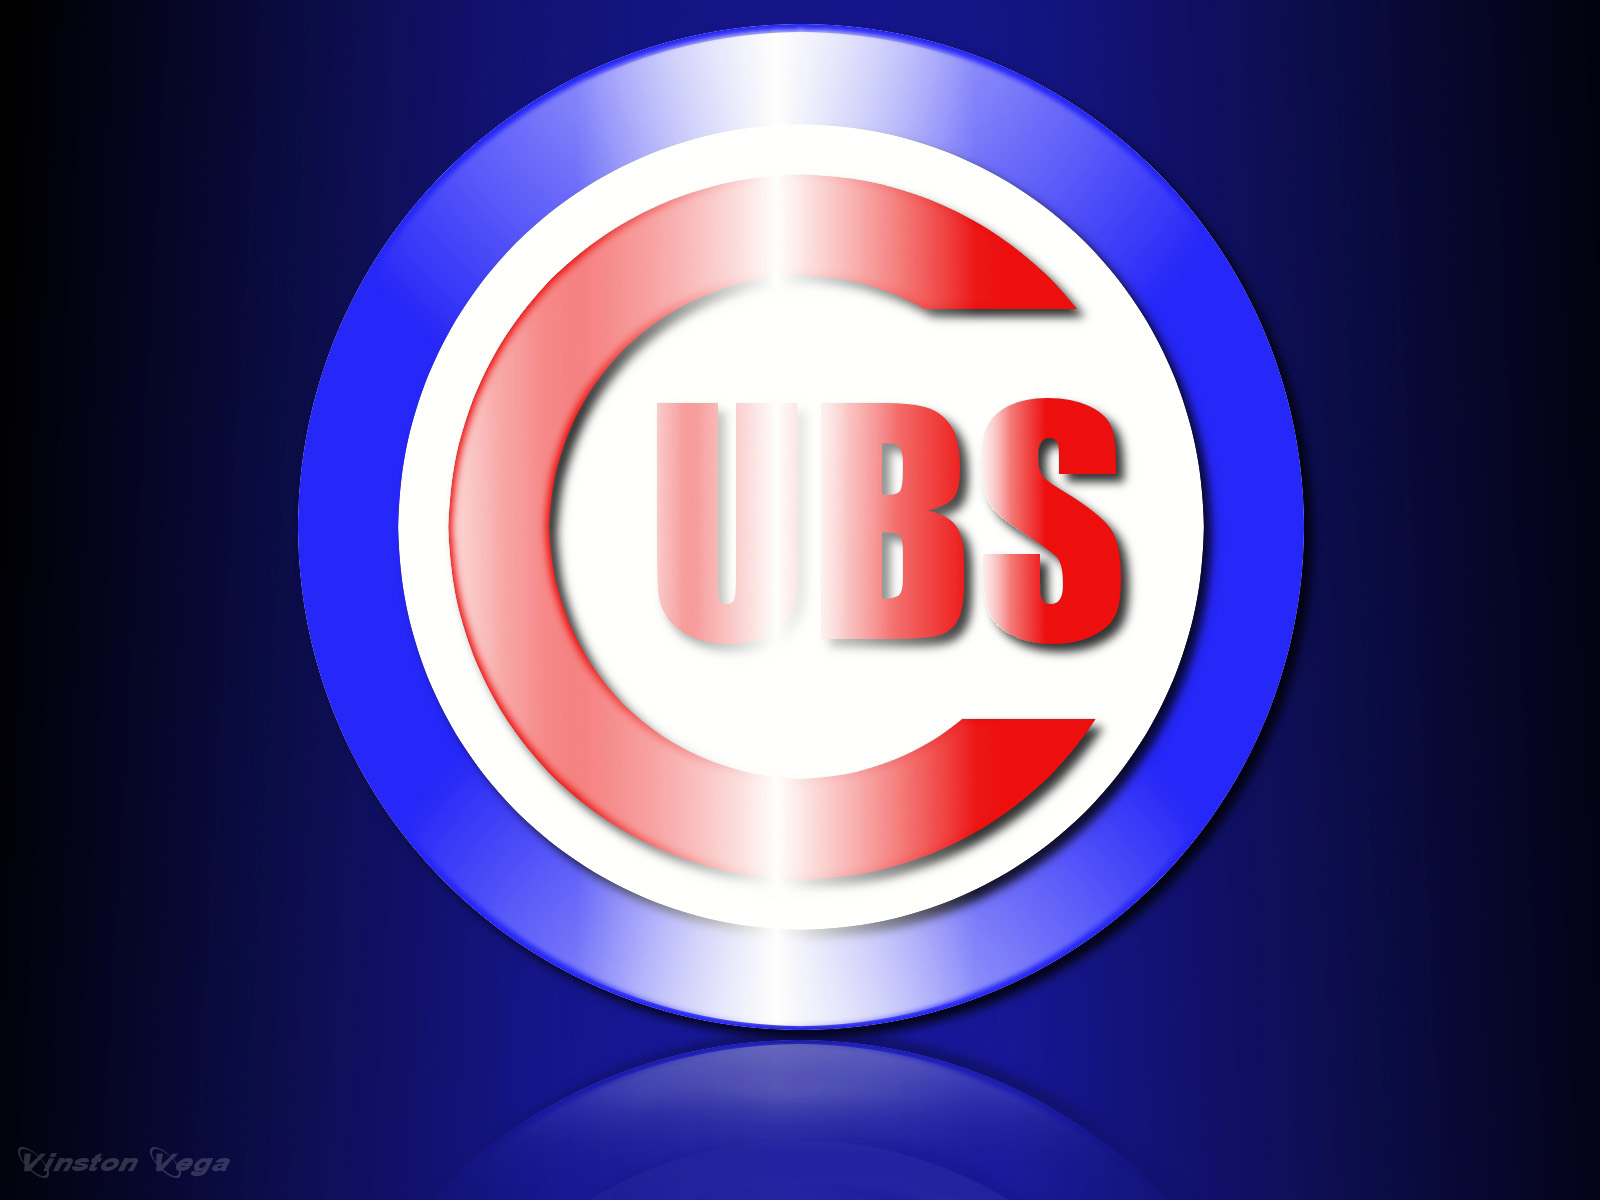 Chicago Cubs Symbol wallpaper